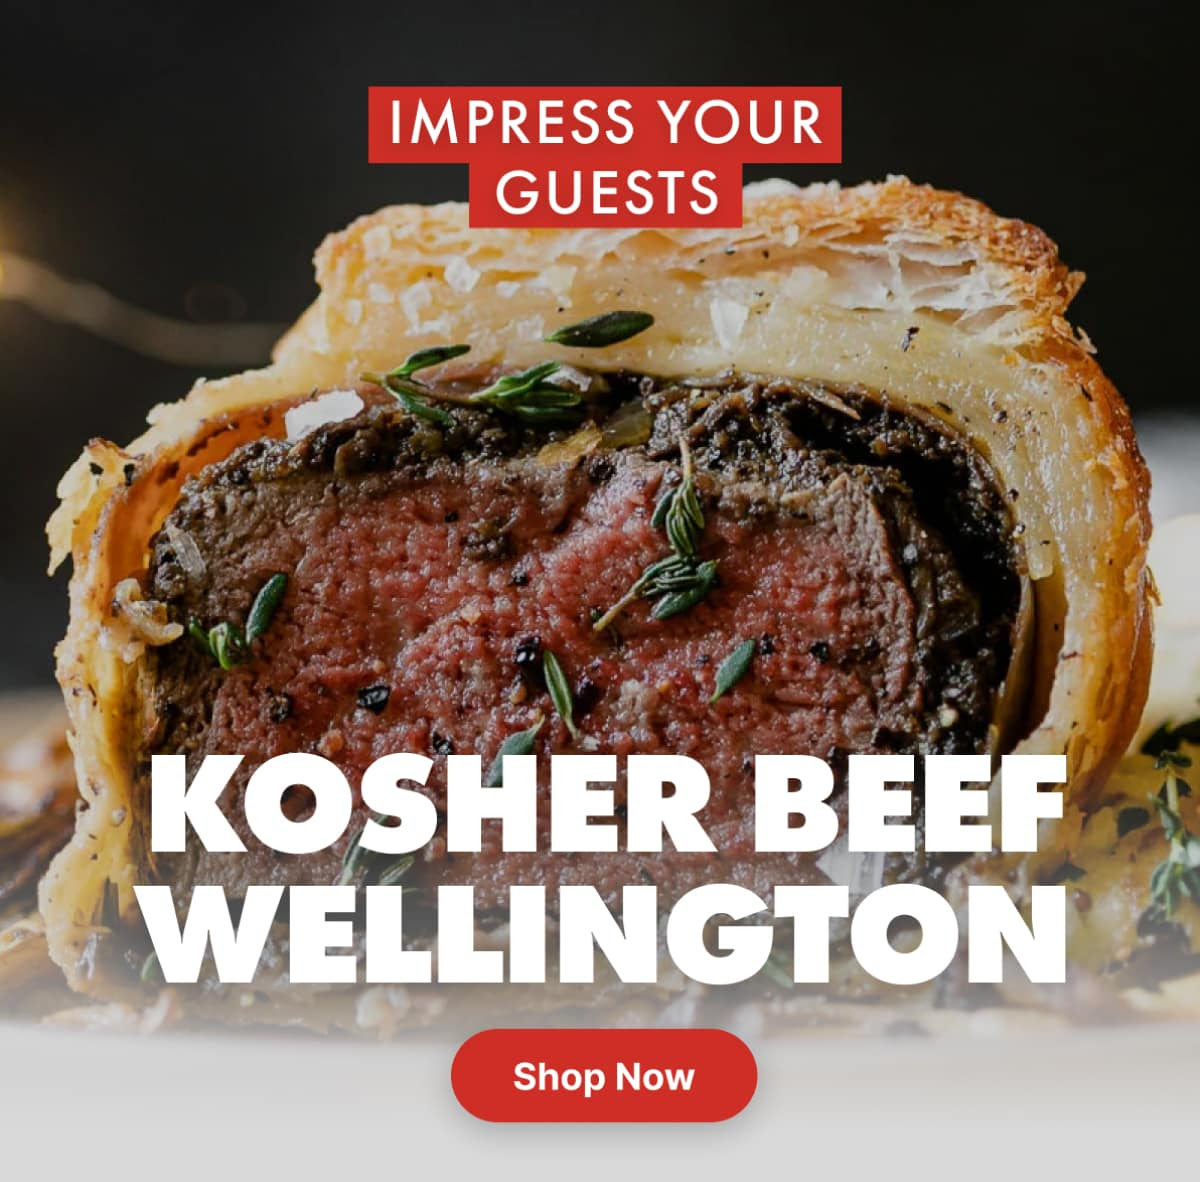 Impress Your Guests: Kosher Beef Wellington, Buy Now!